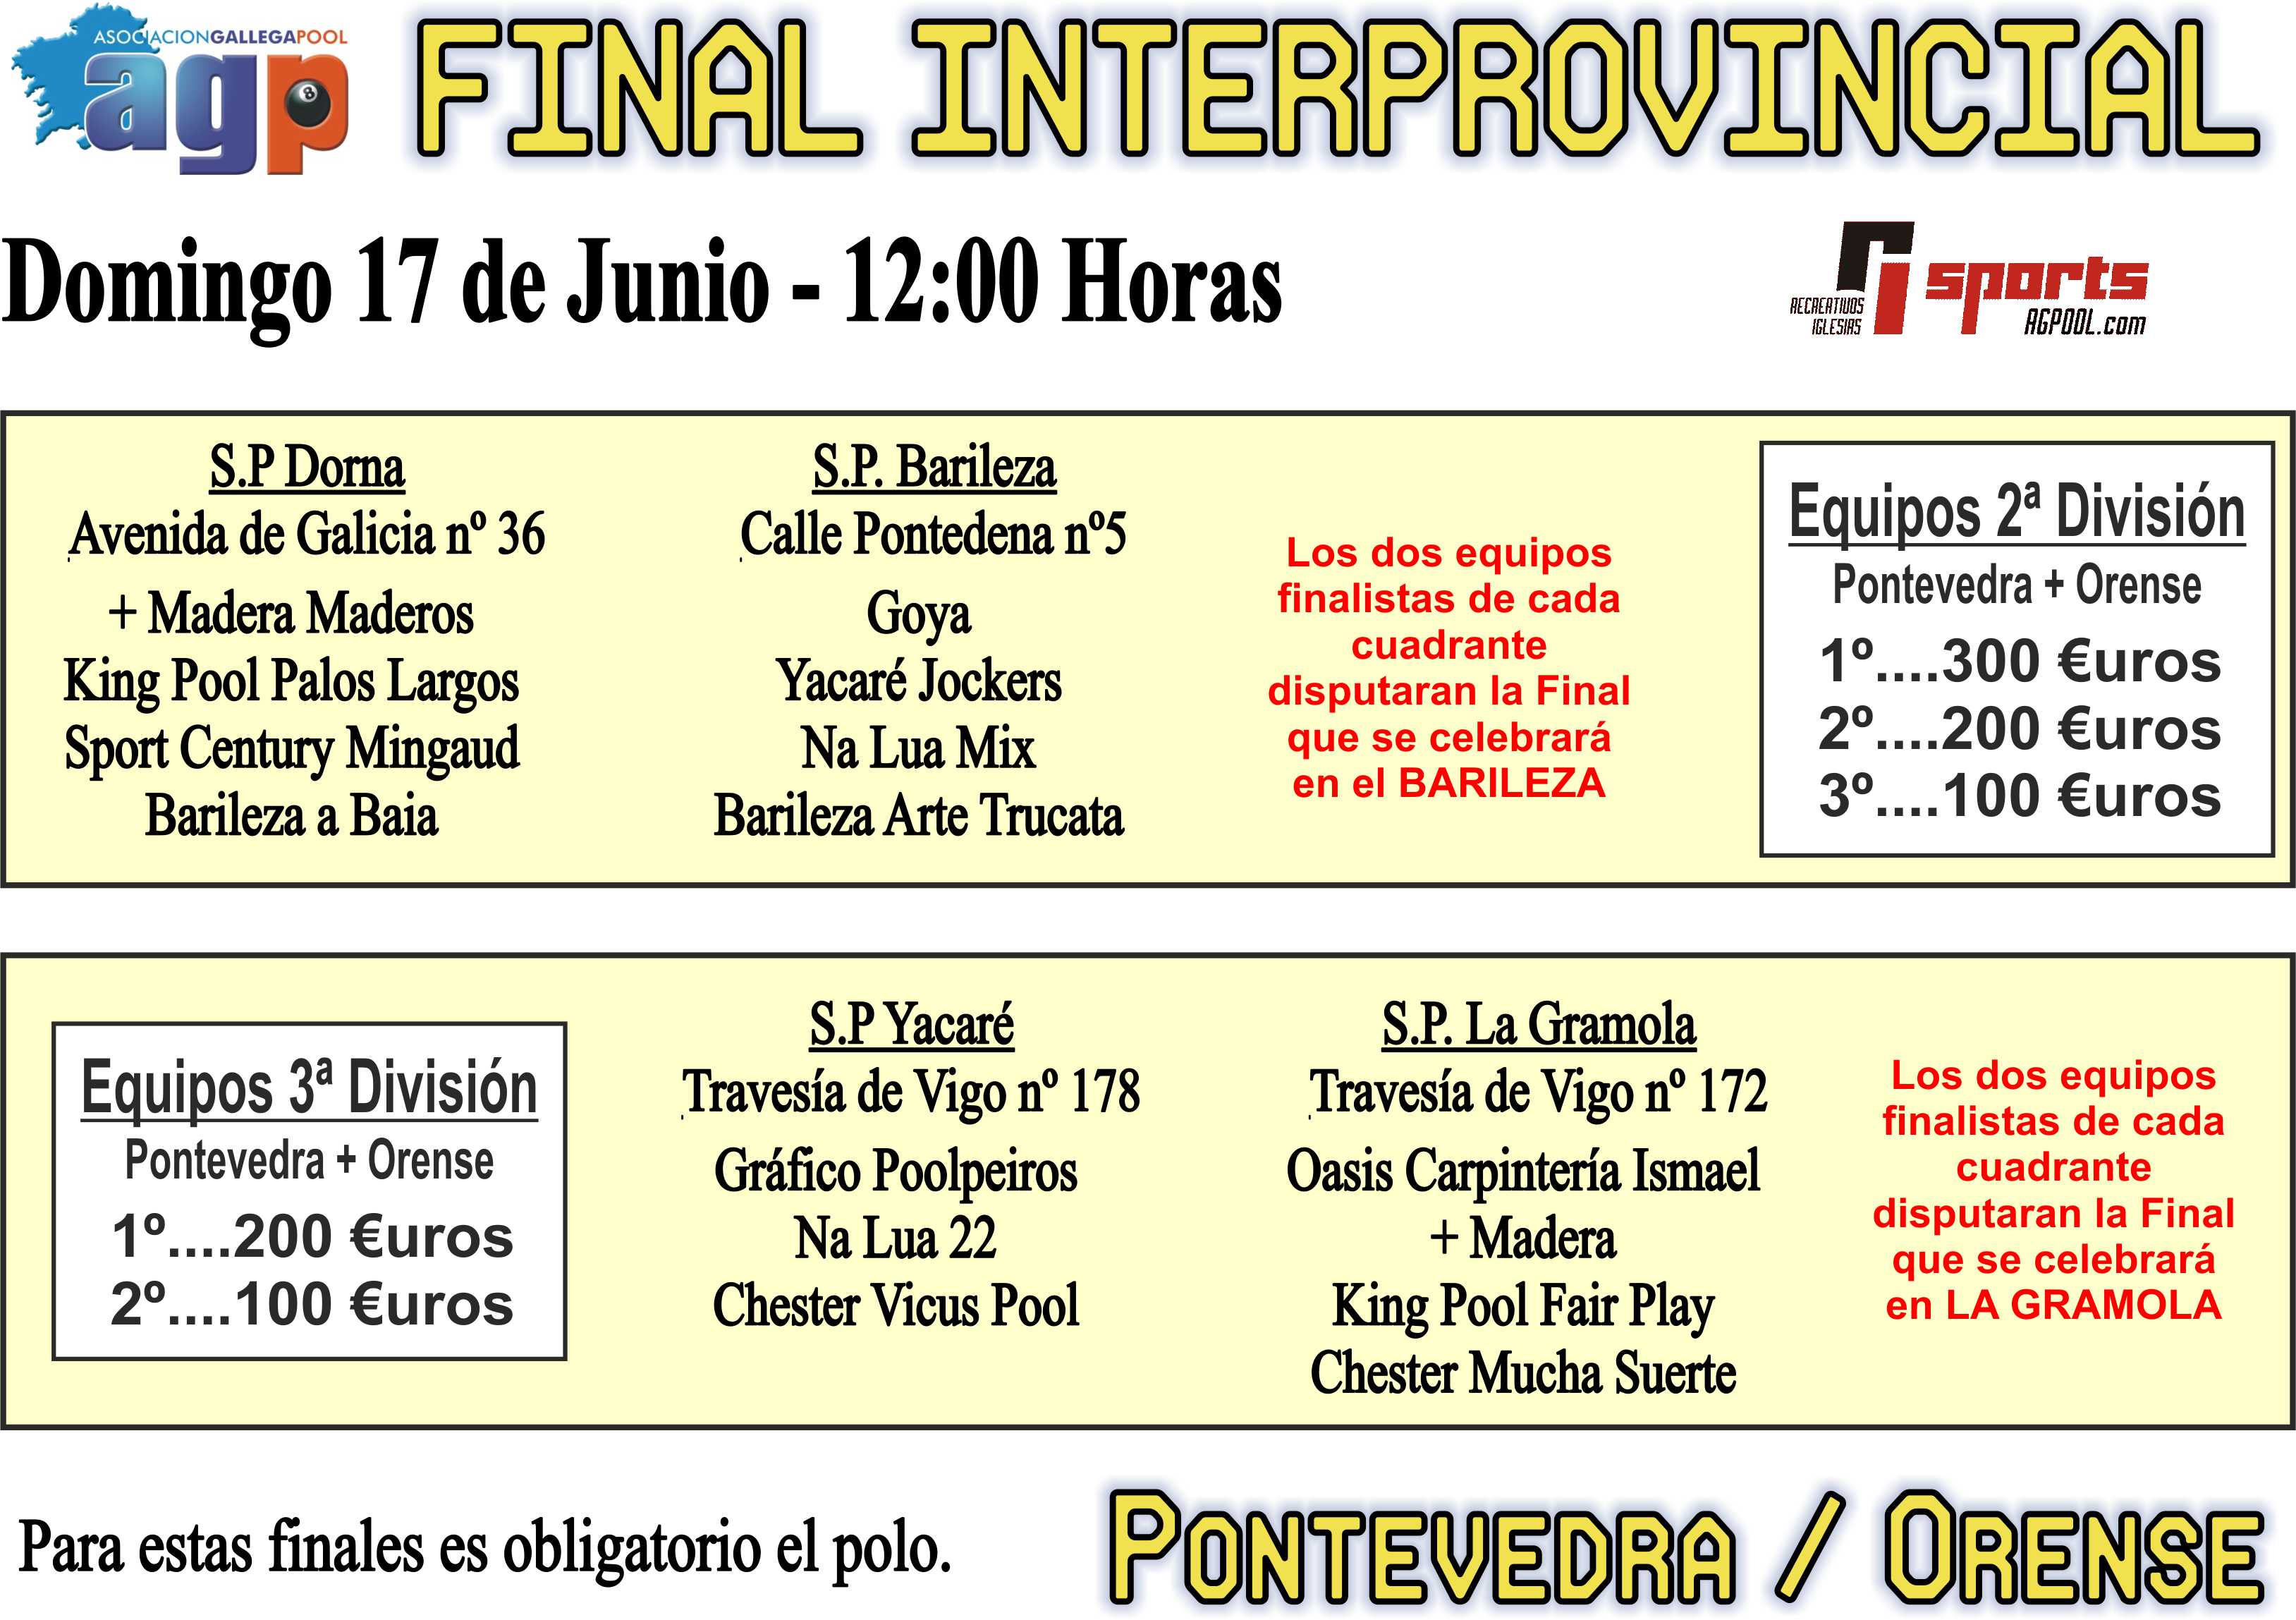 Sorteo Final Interprovincial de Equipos Pontevedra / Orense